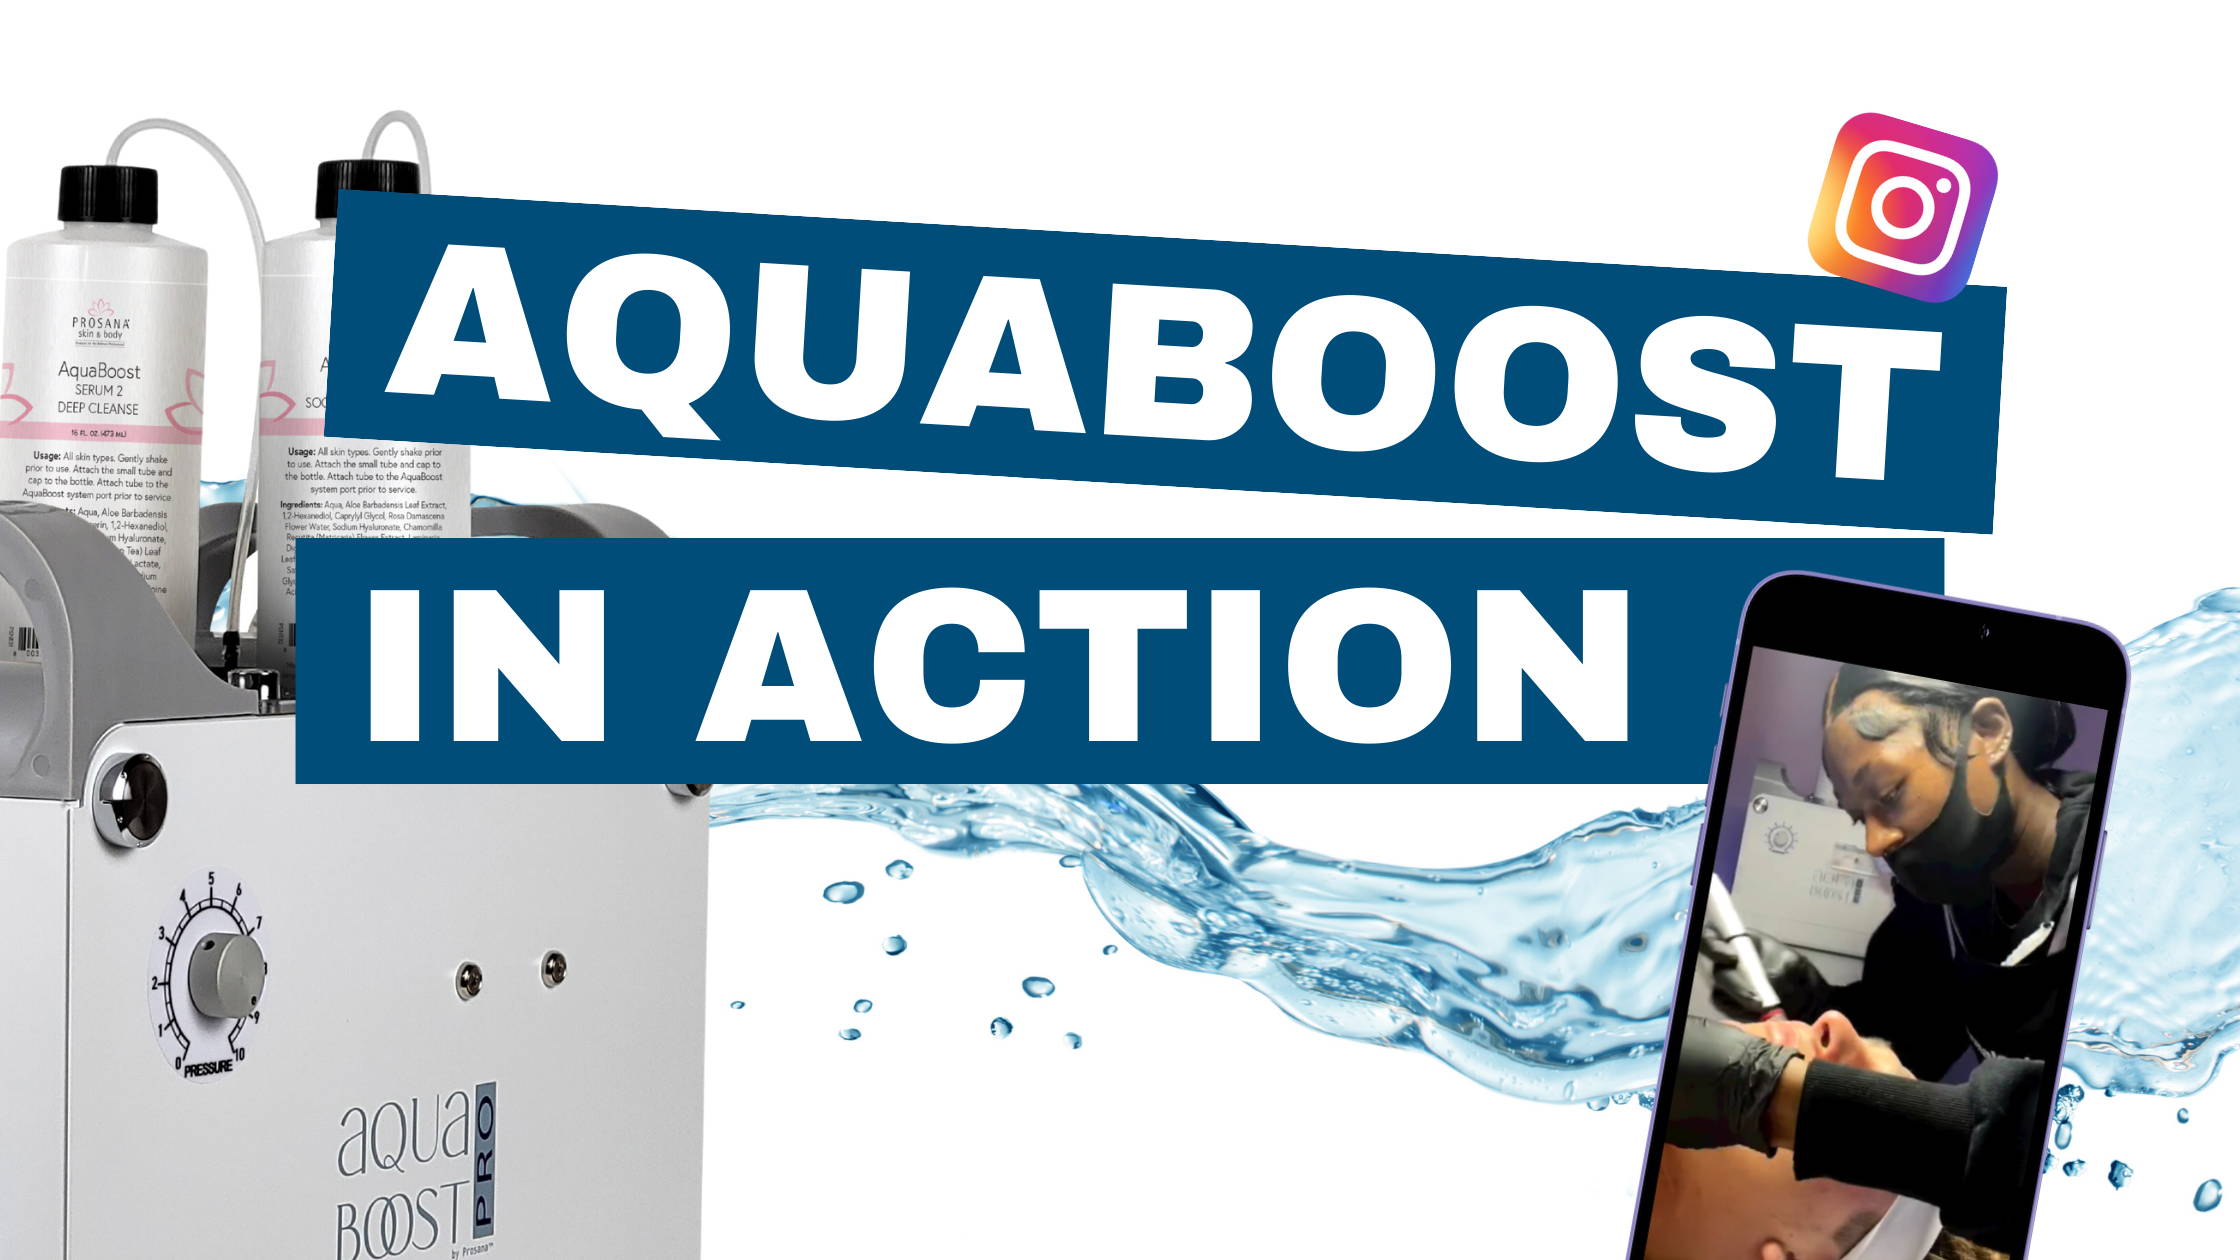 See AquaBoost in Action on Social Media